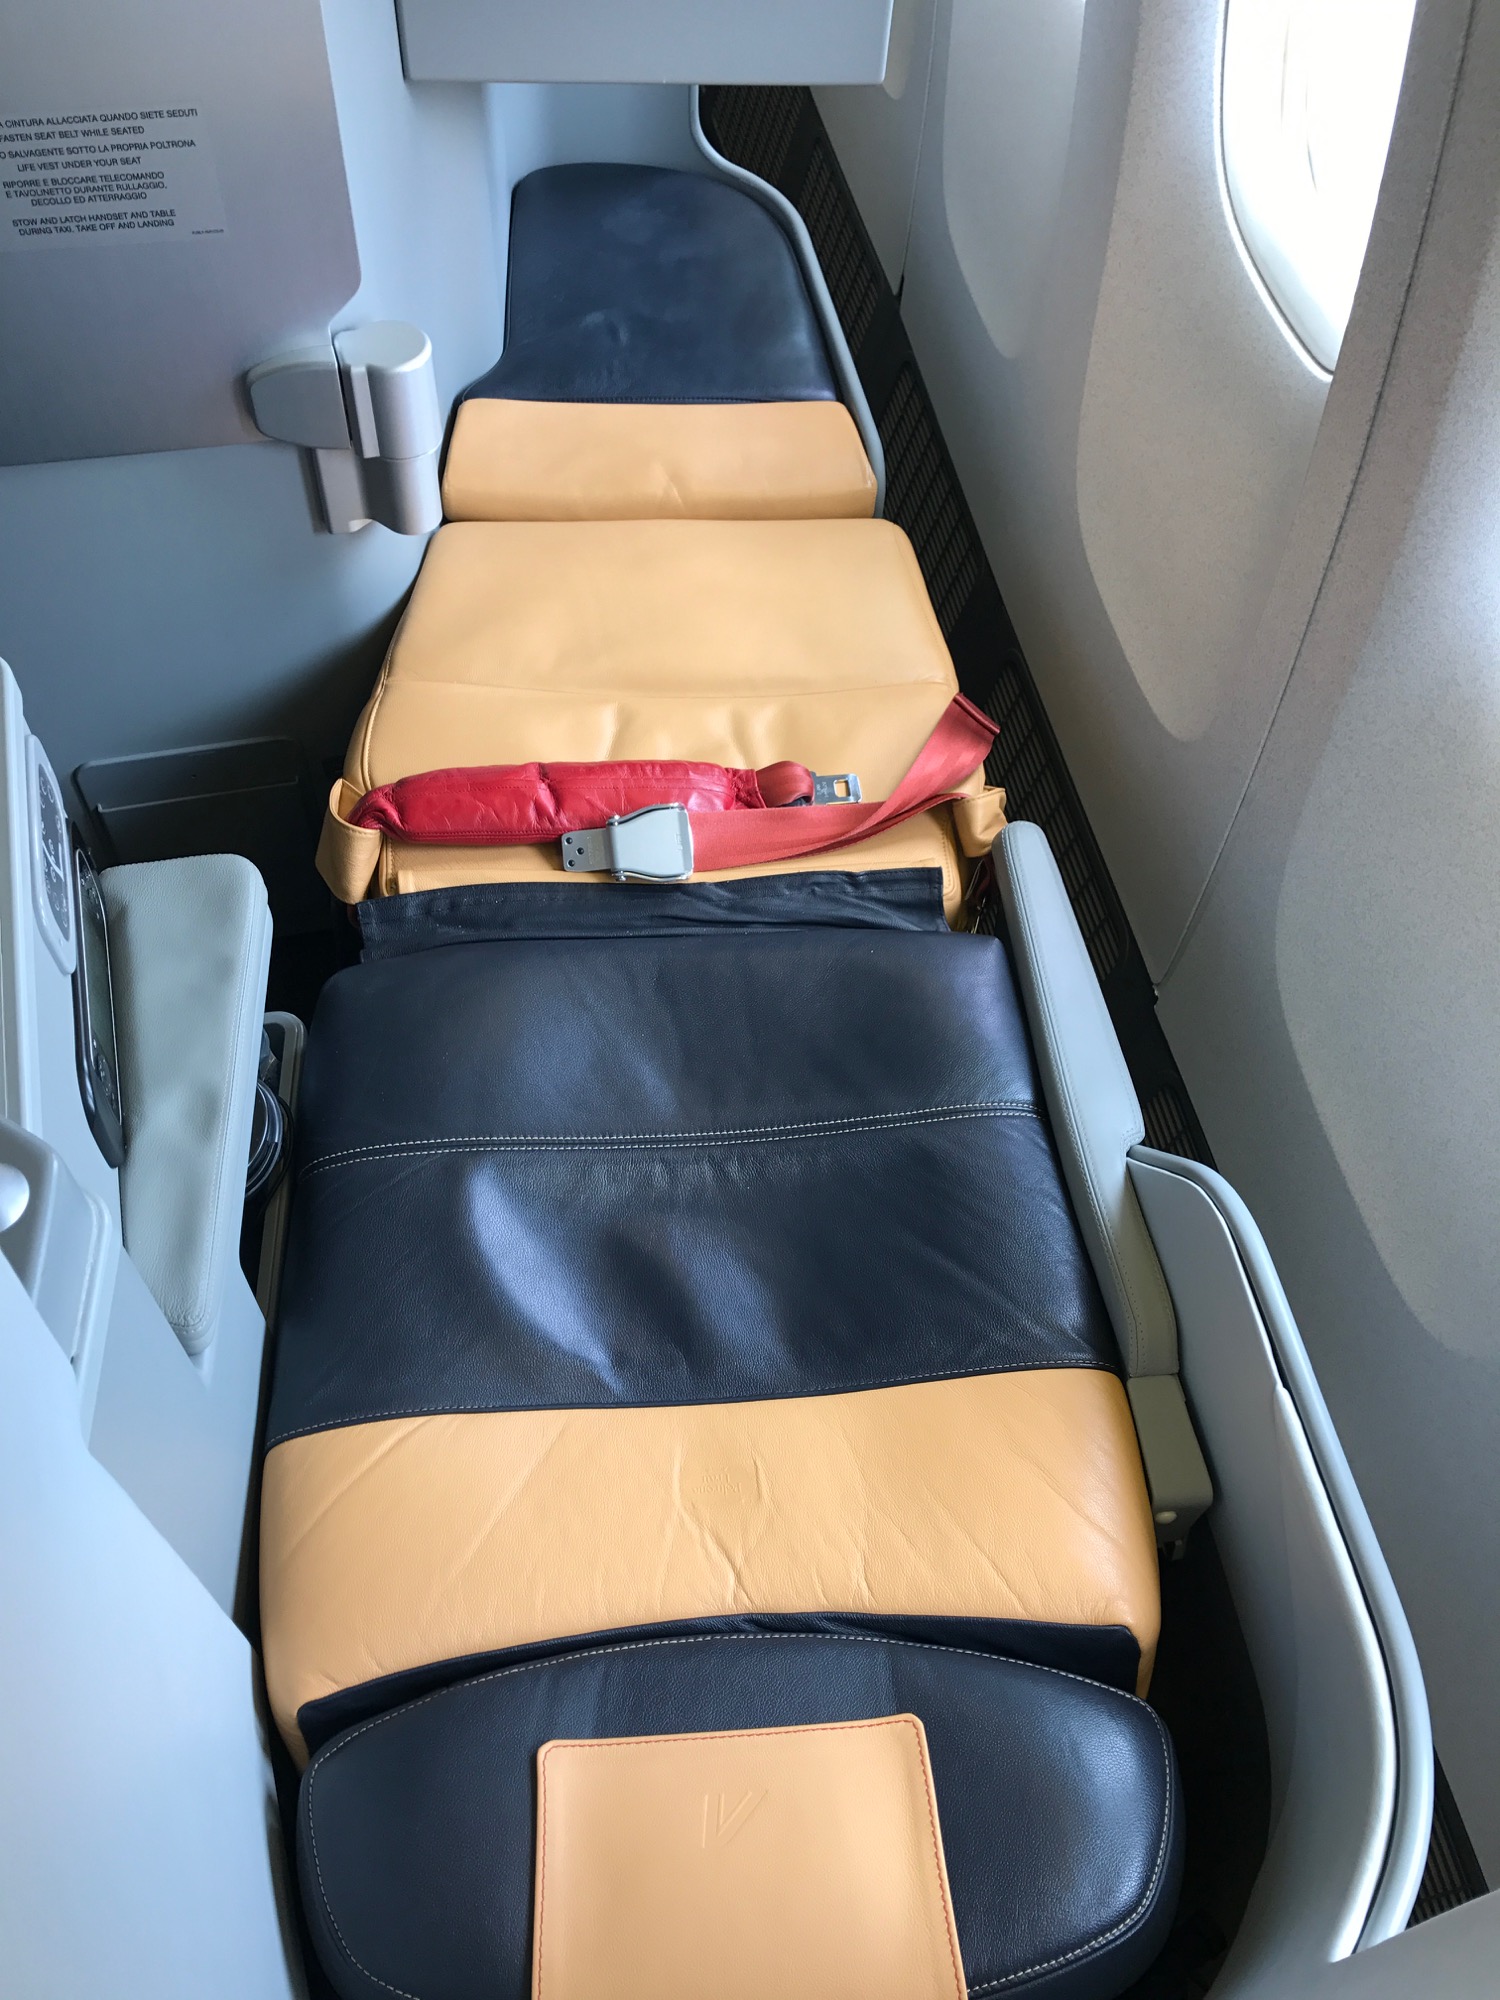 a seat belts on a plane